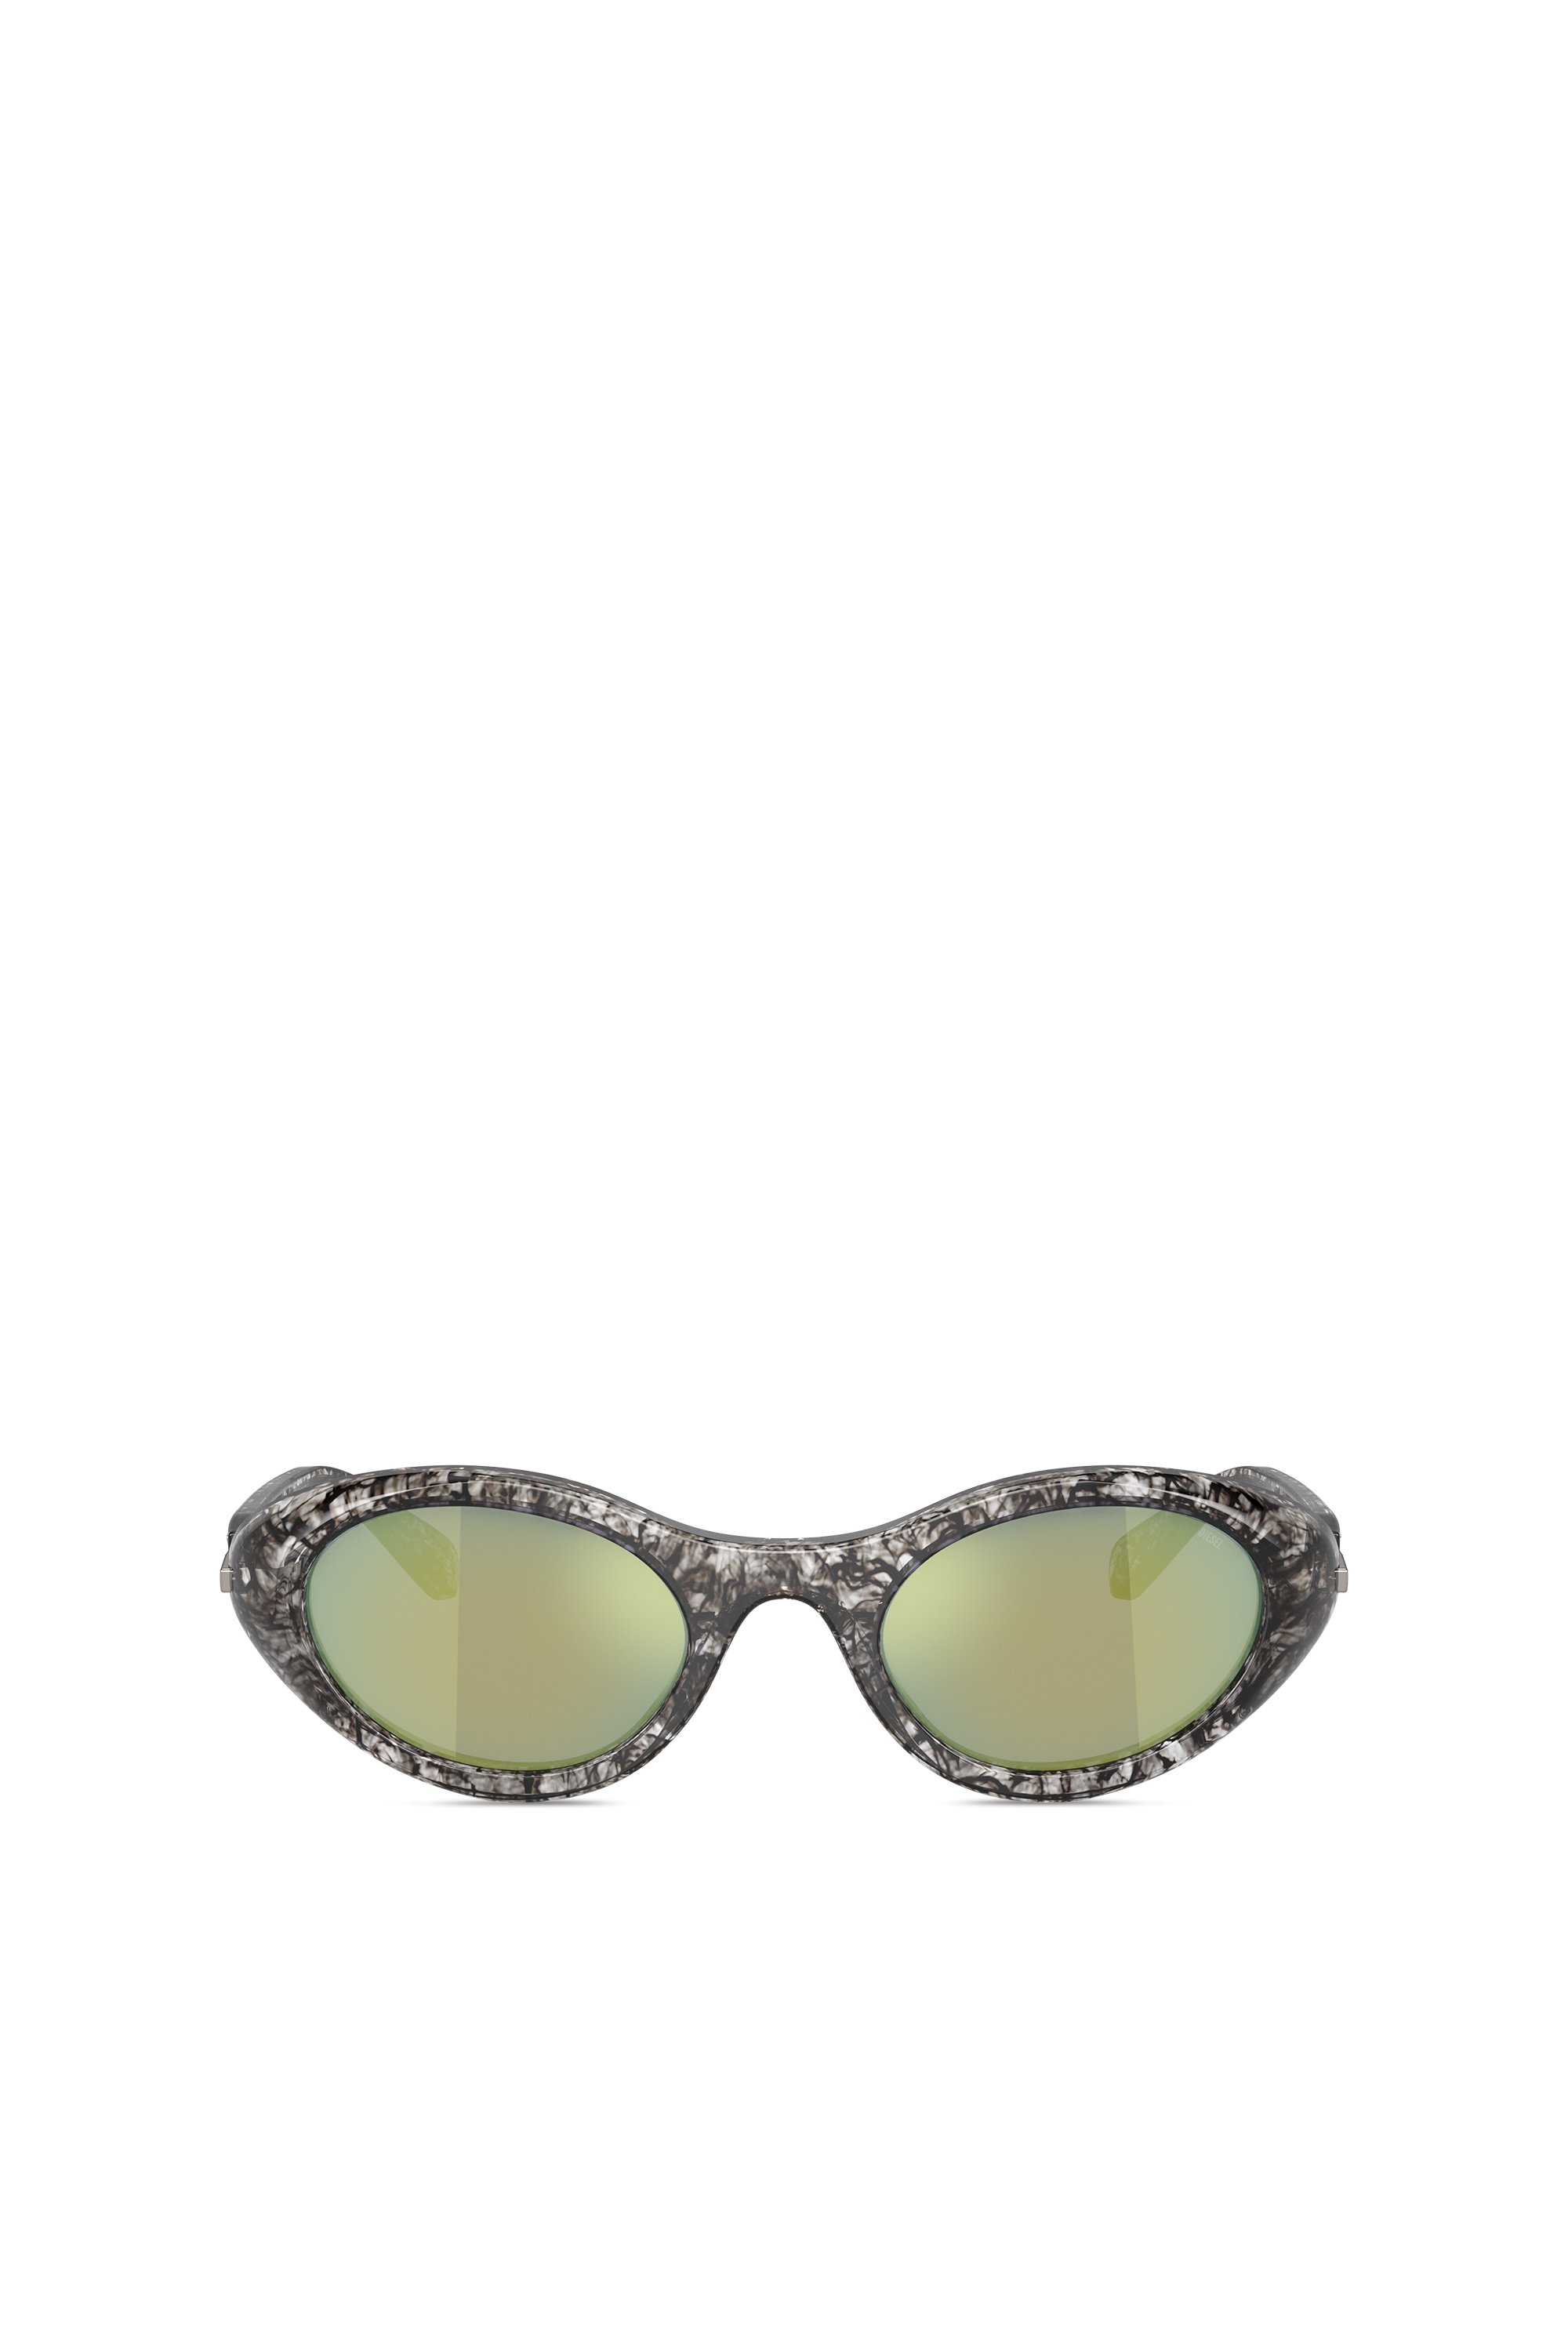 Diesel - Oval shape sunglasses in acetate - Sunglasses - Unisex - Brown